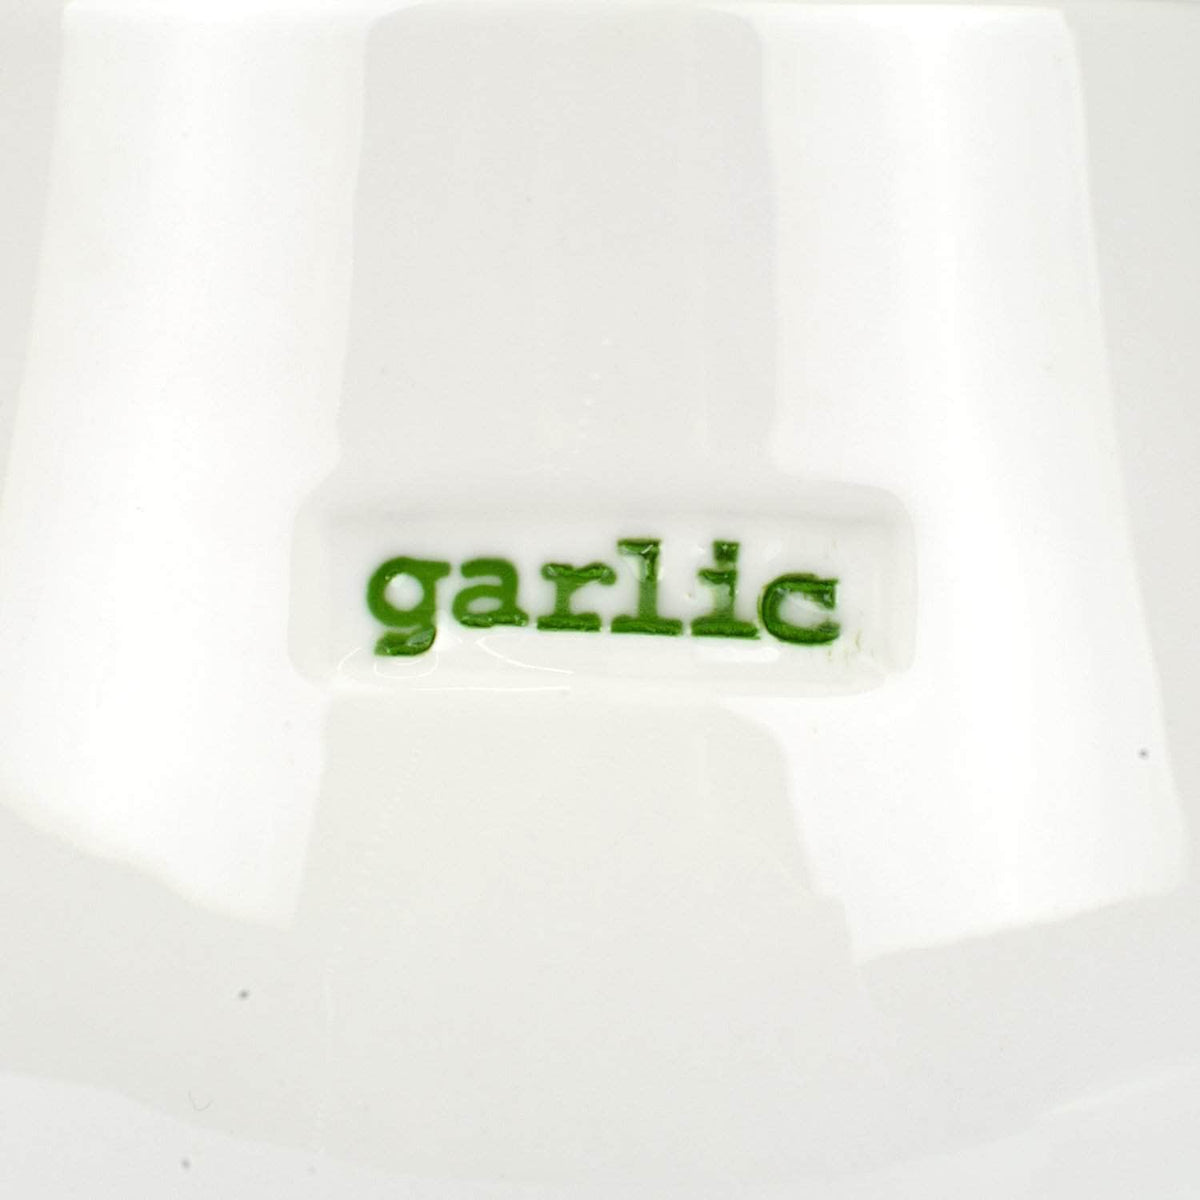 *New* Keith Brymer Jones garlic pot